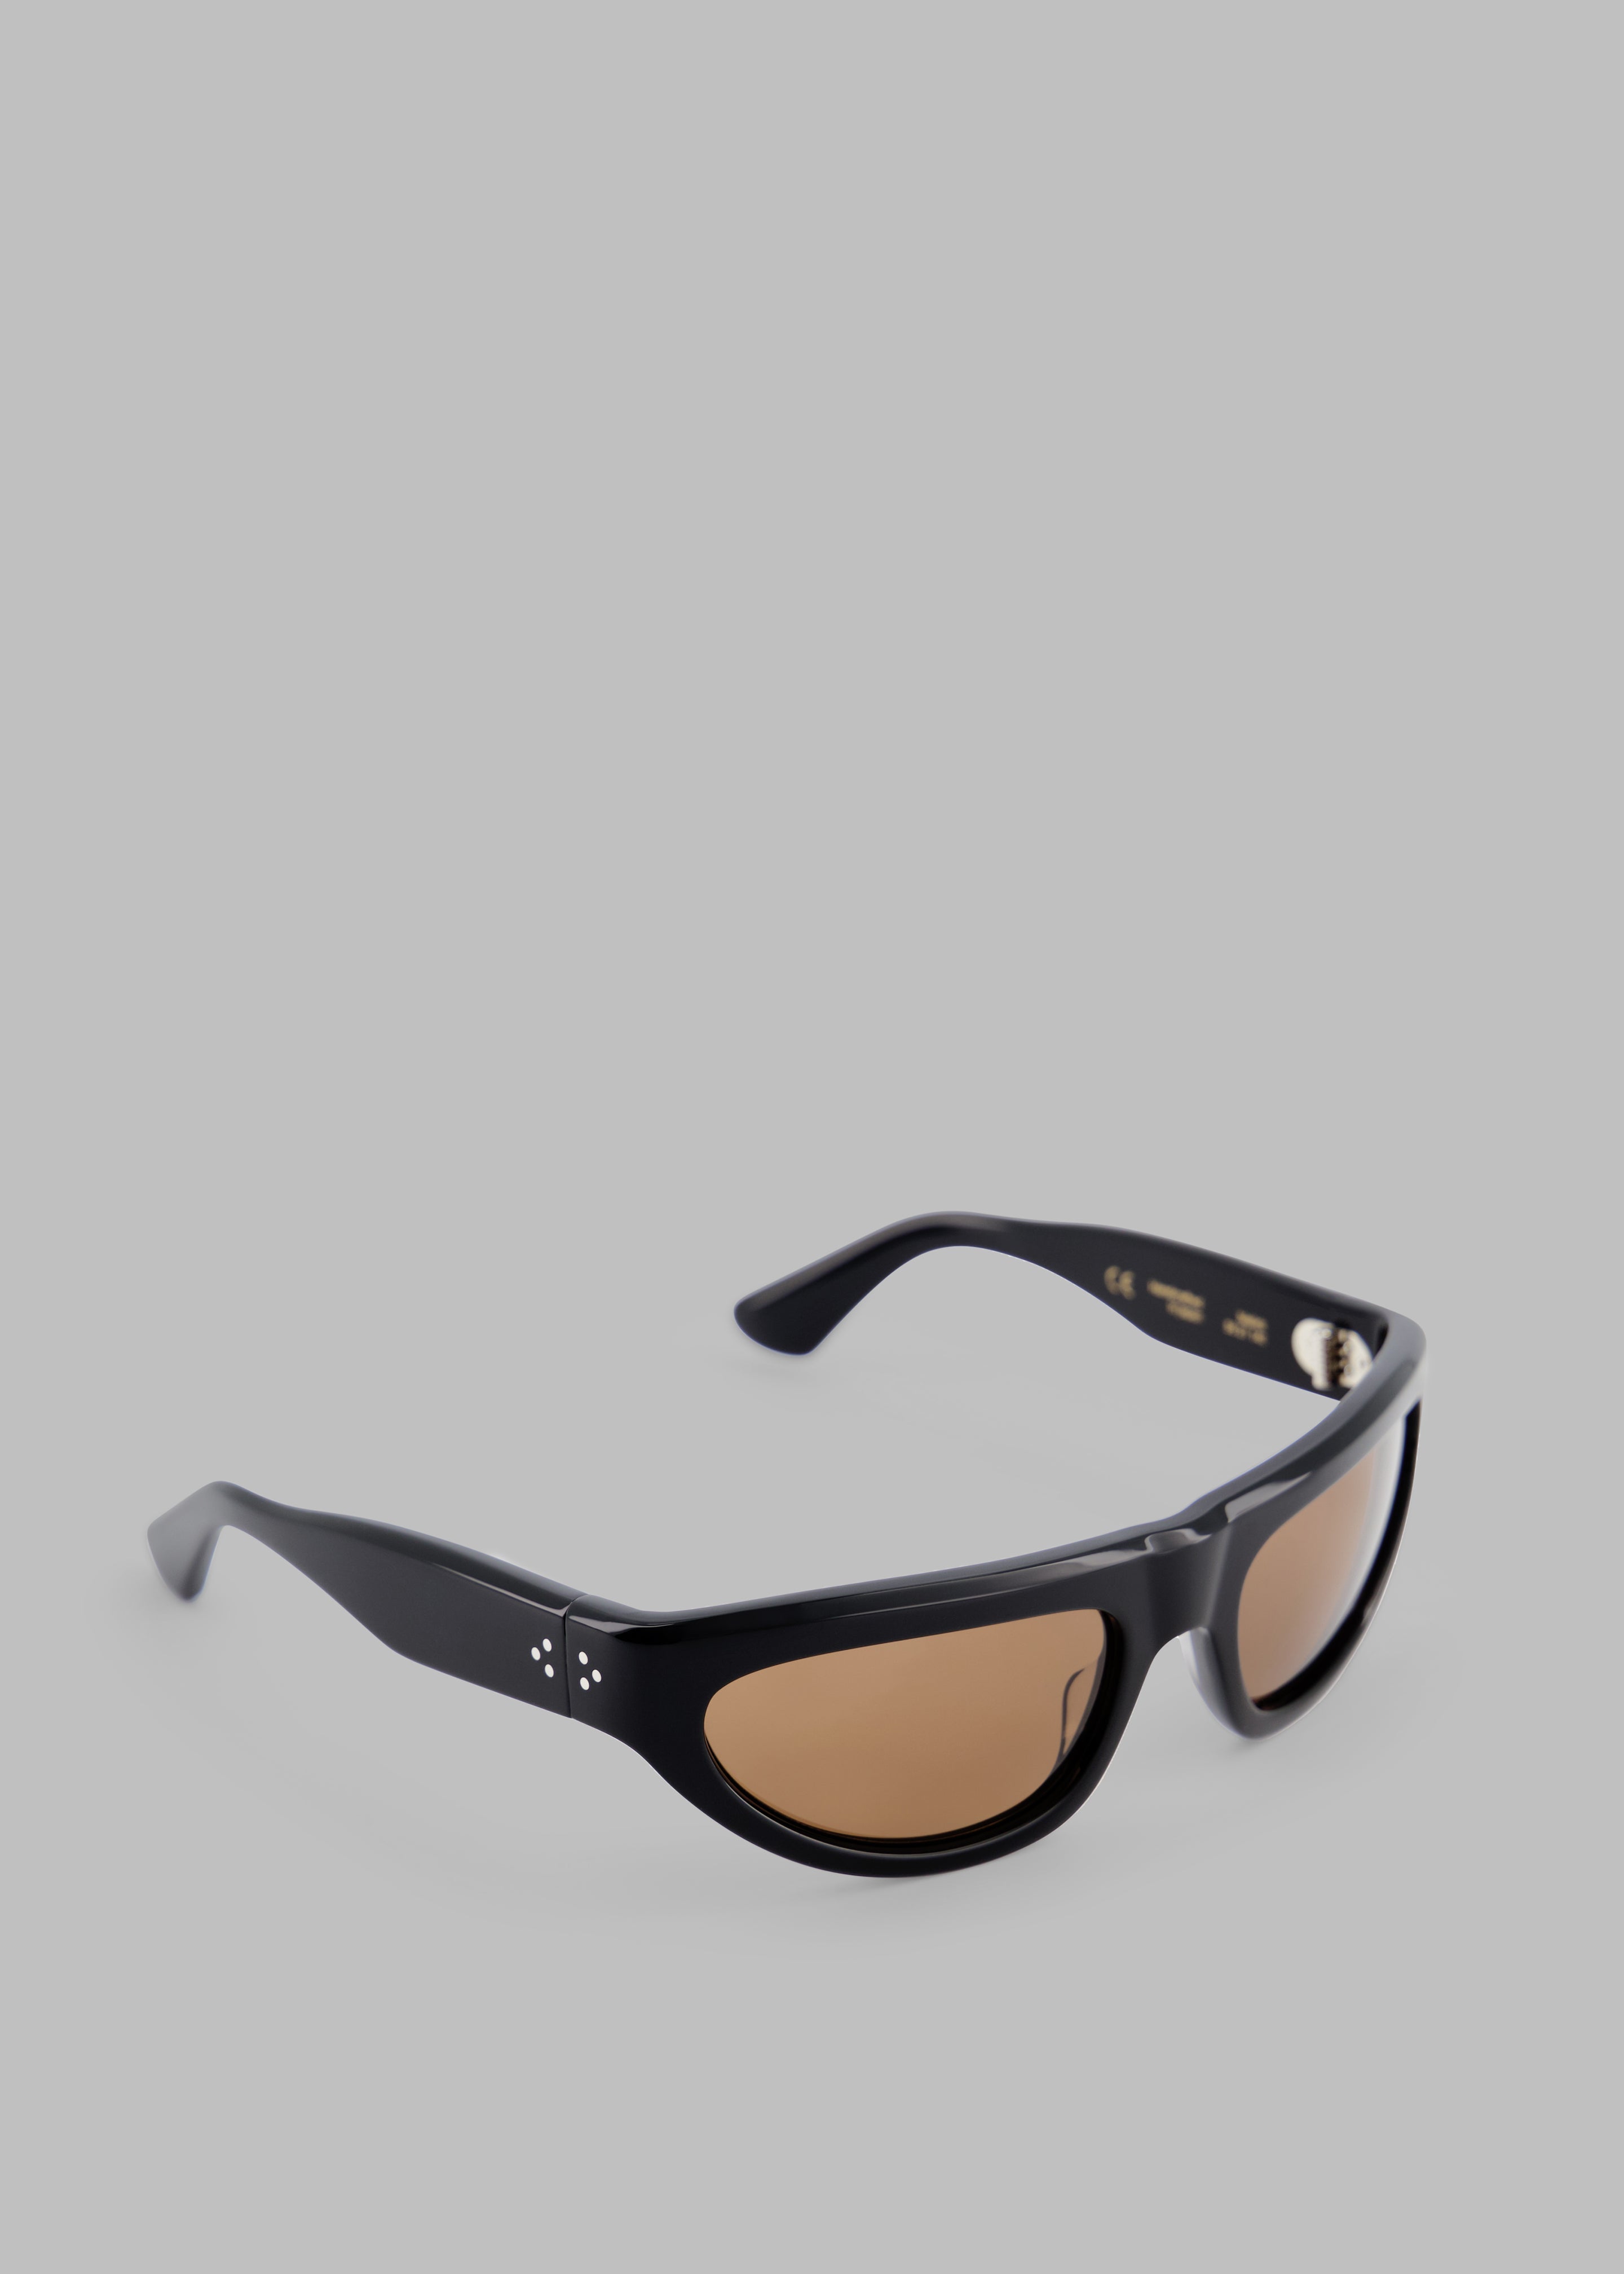 Port Tanger Malick Sunglasses - Black Acetate/Tobacco Lens - 2